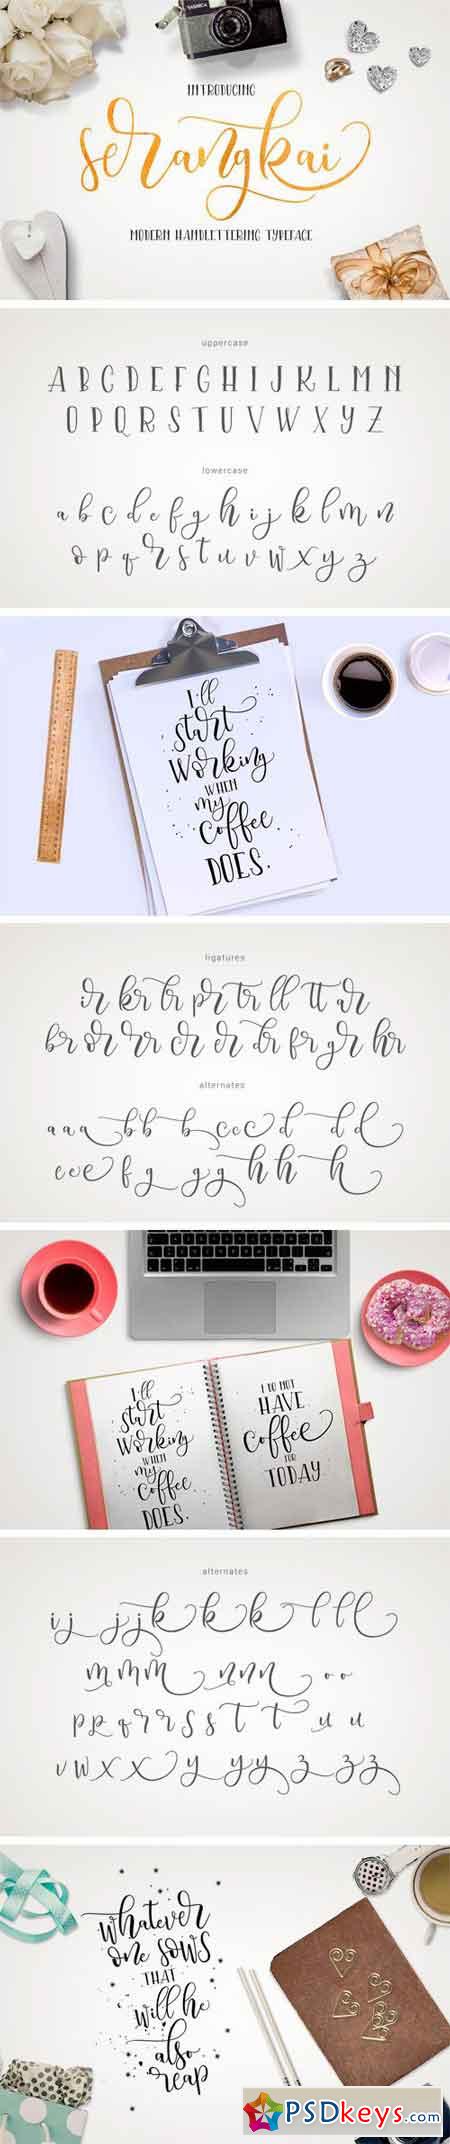 Serangkai Typeface